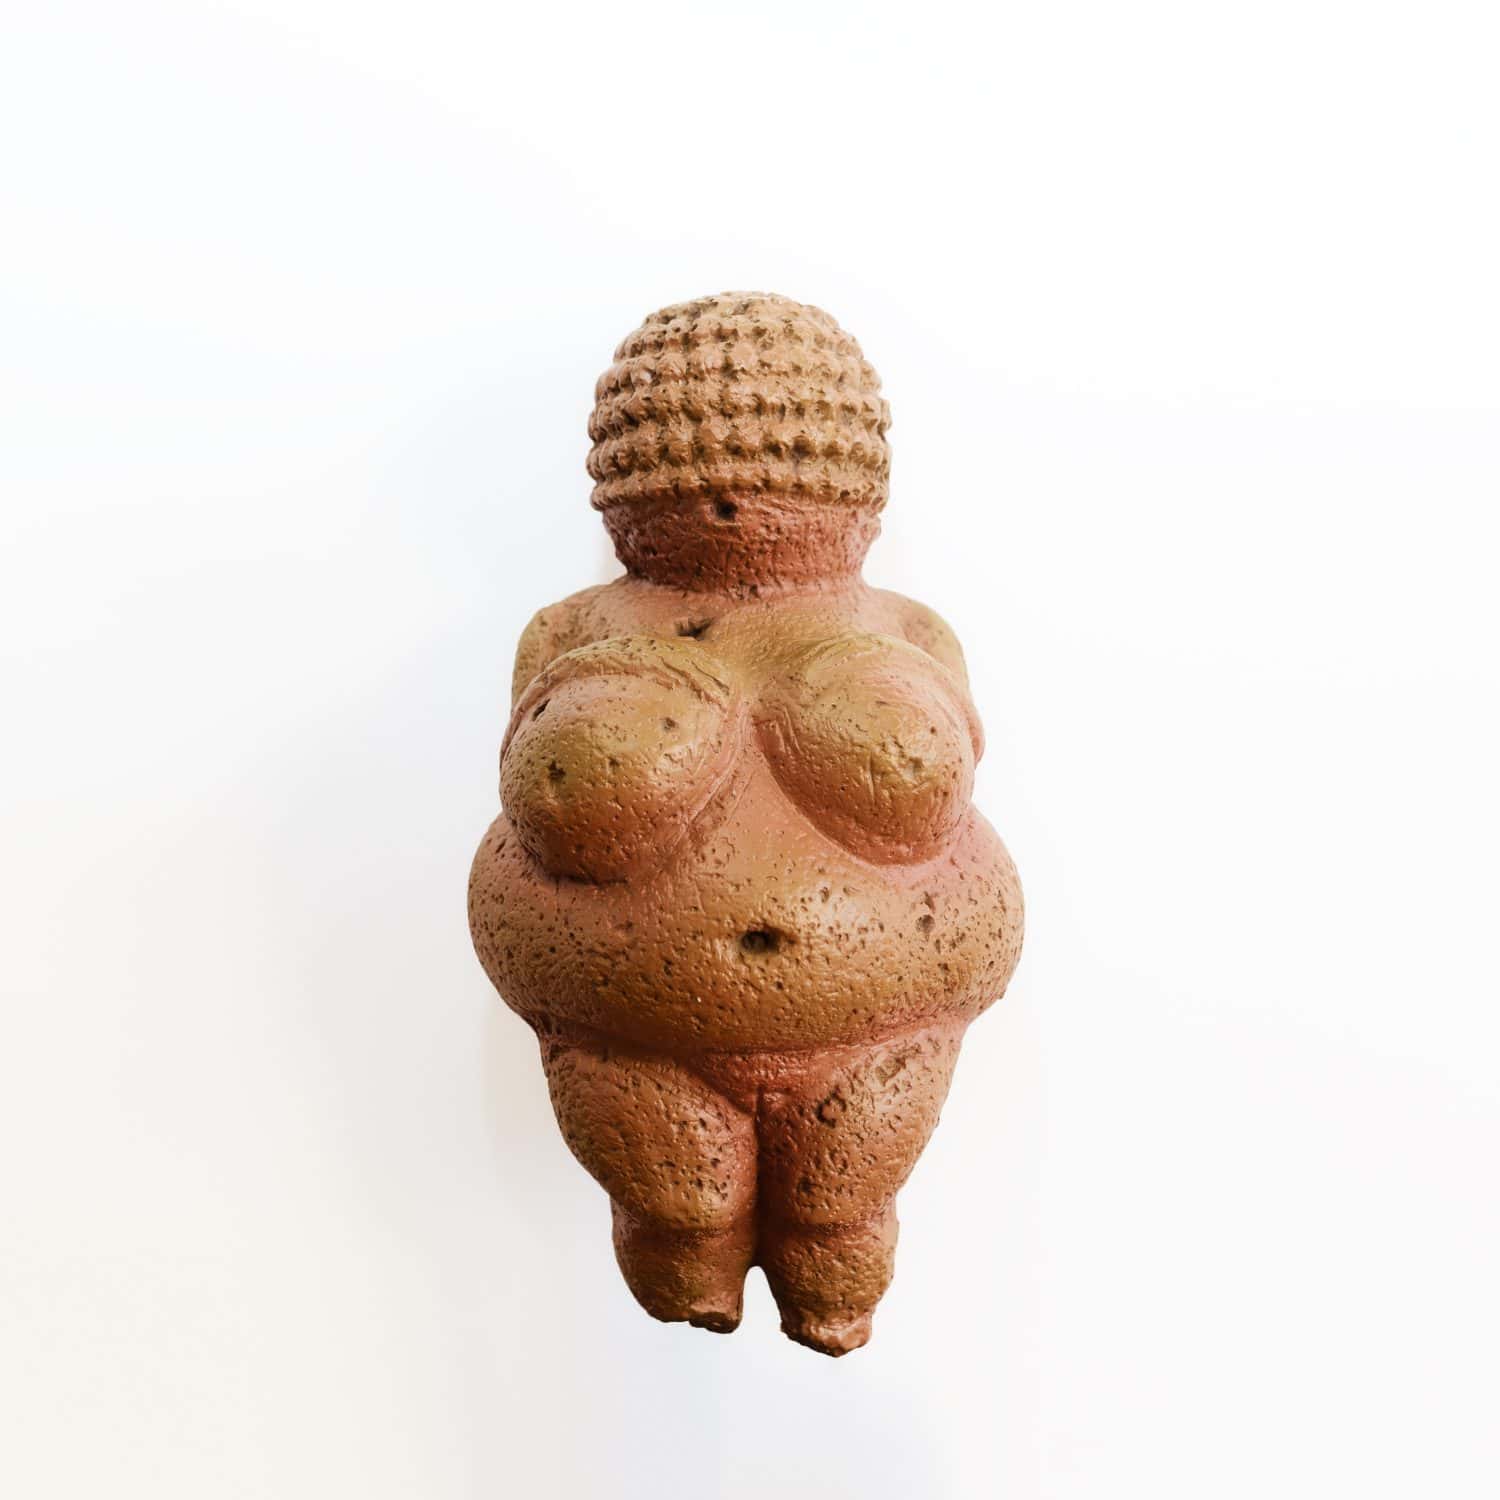 Venus of Willendorf statuette, exact copy of the original. Ancient motherhood and fertility symbol.